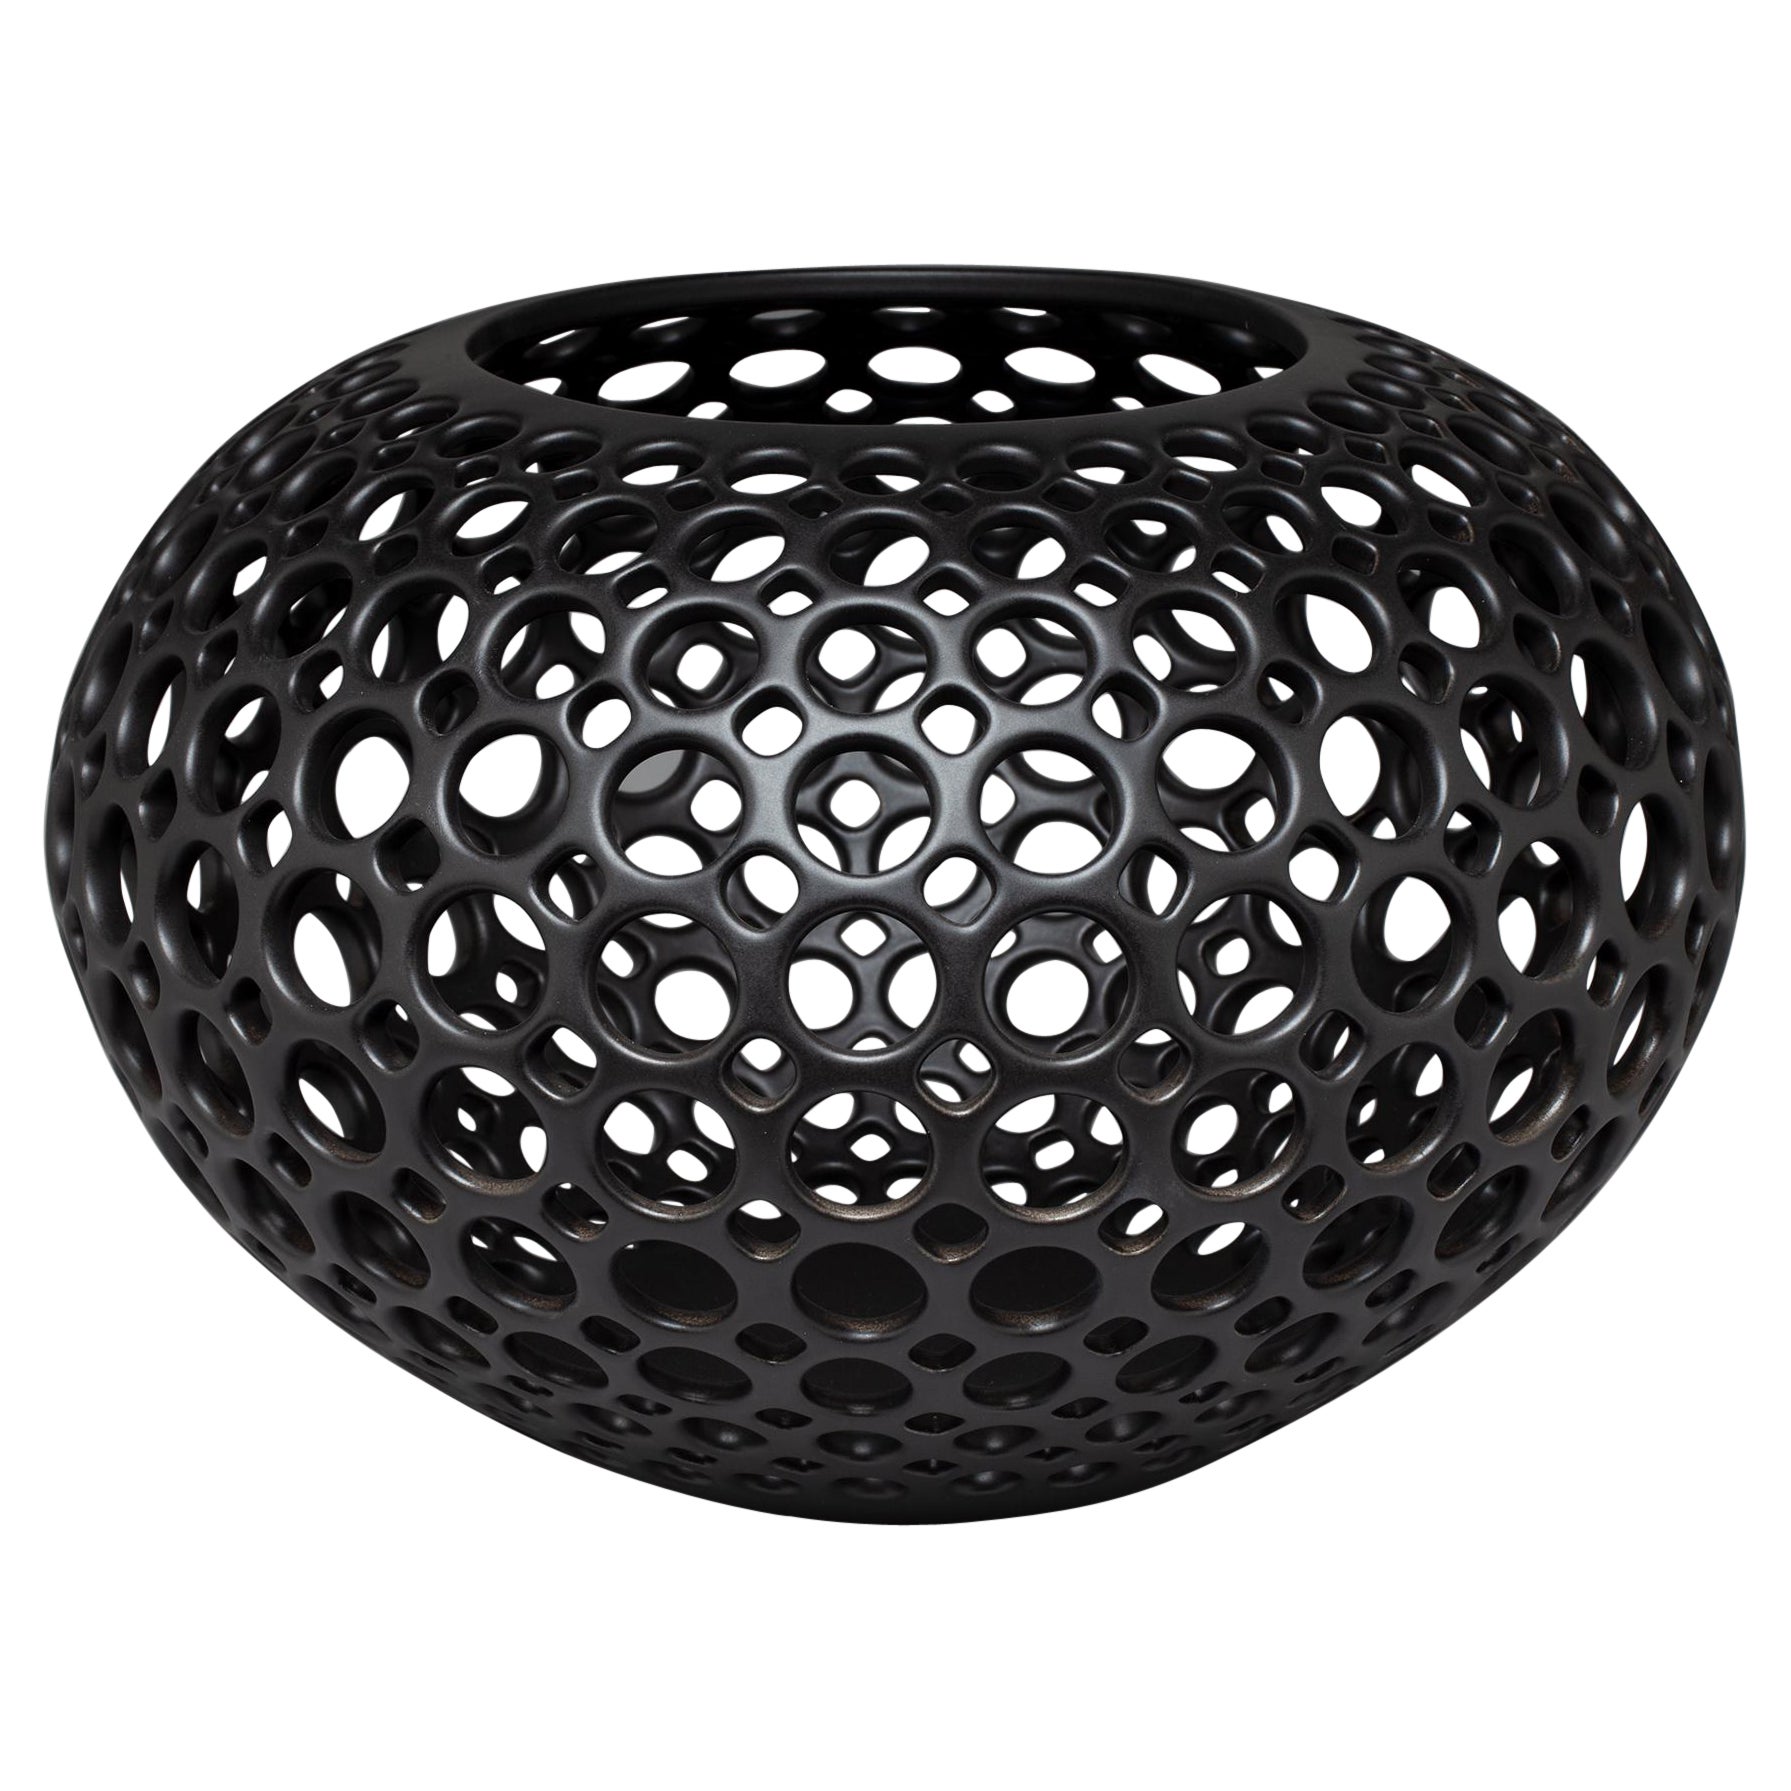 Pierced Ceramic Orb- Black